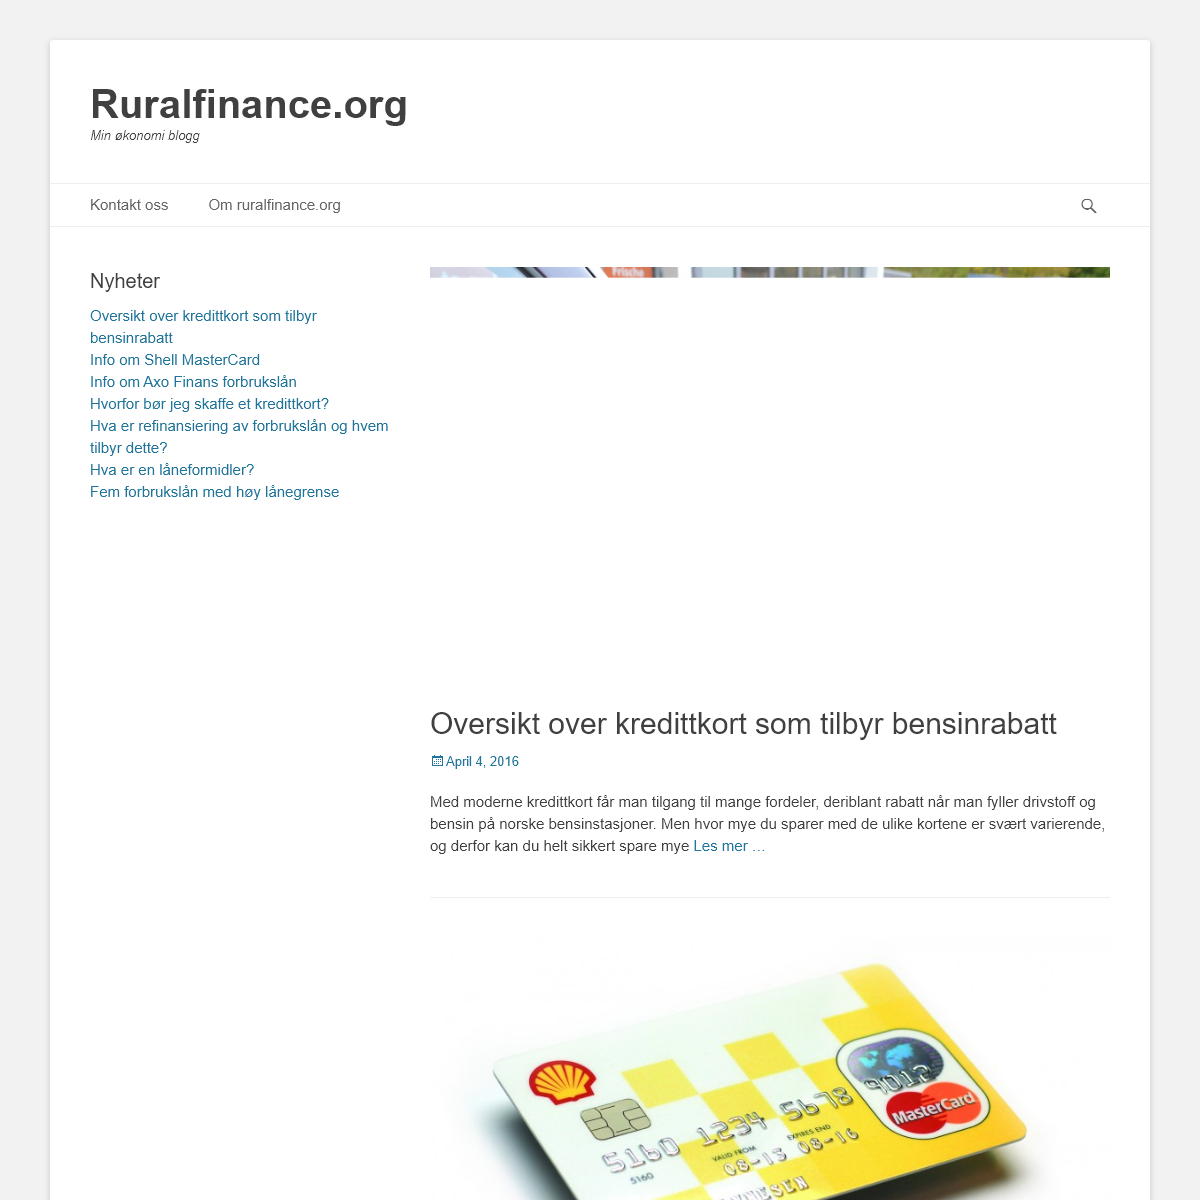 A complete backup of ruralfinance.org